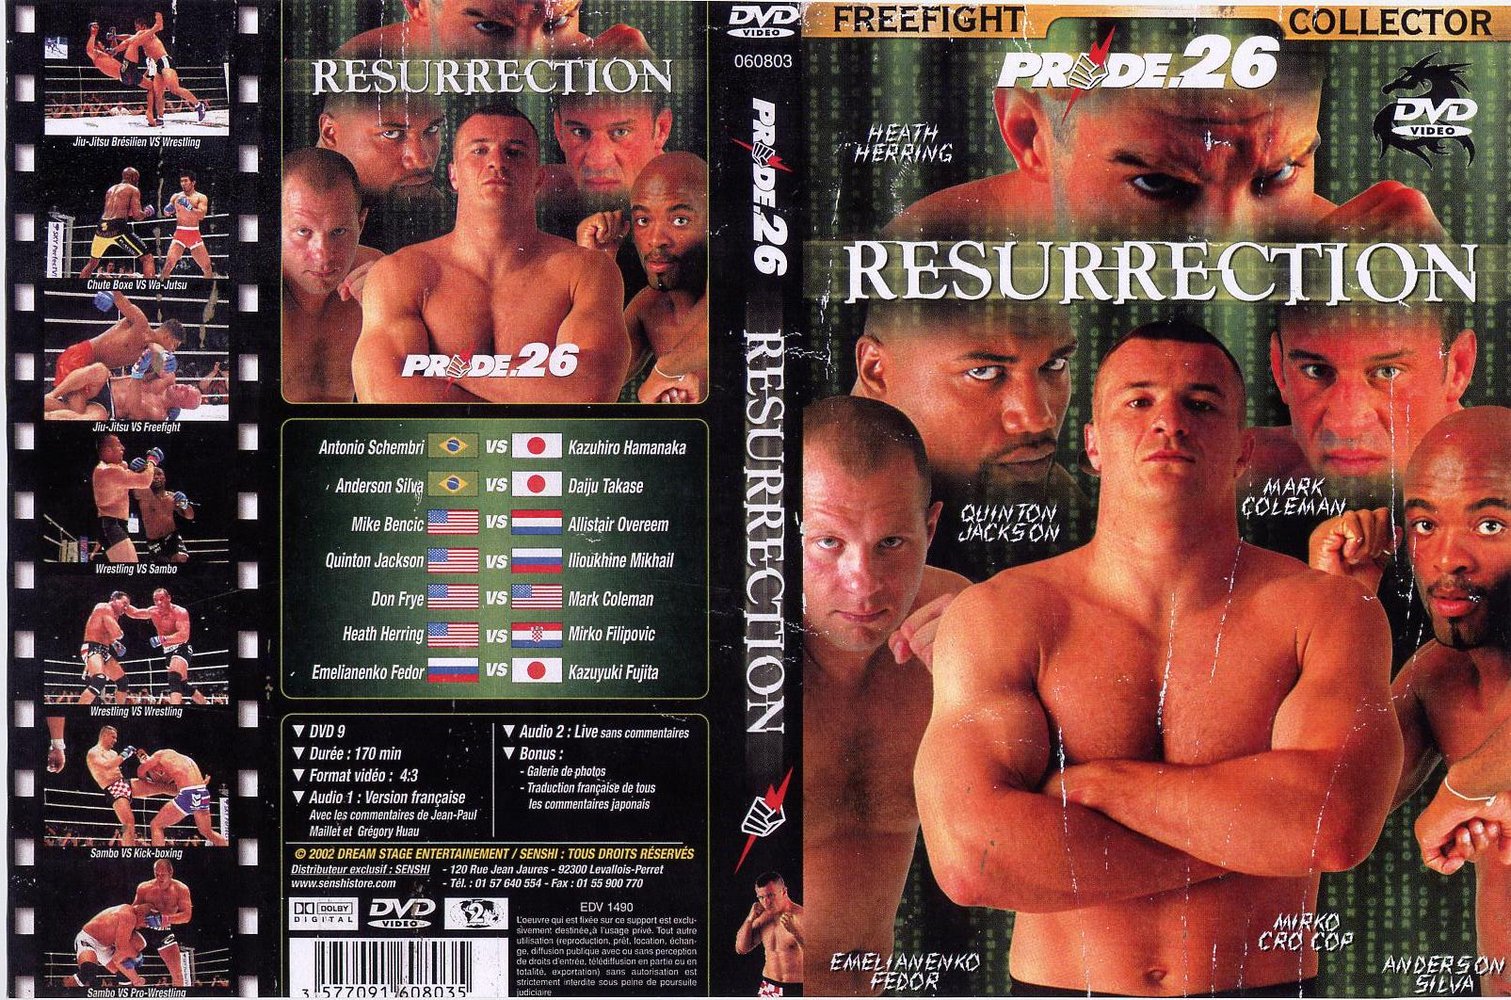 Jaquette DVD Pride 26 resurrection